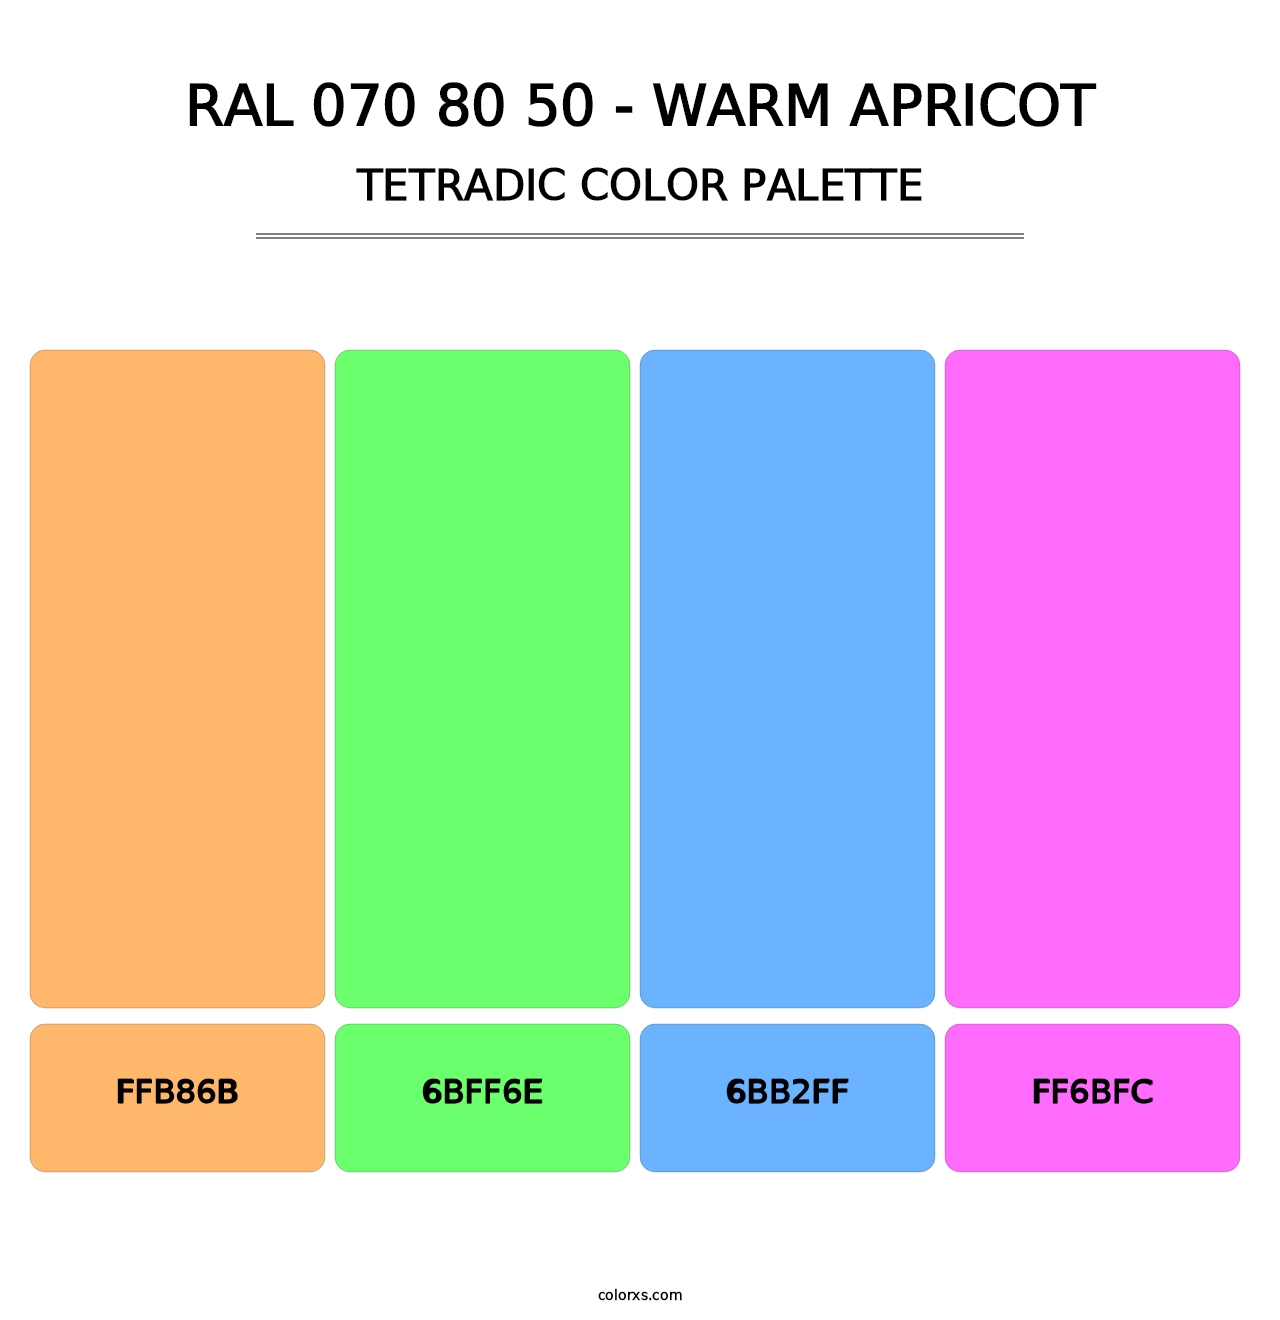 RAL 070 80 50 - Warm Apricot - Tetradic Color Palette